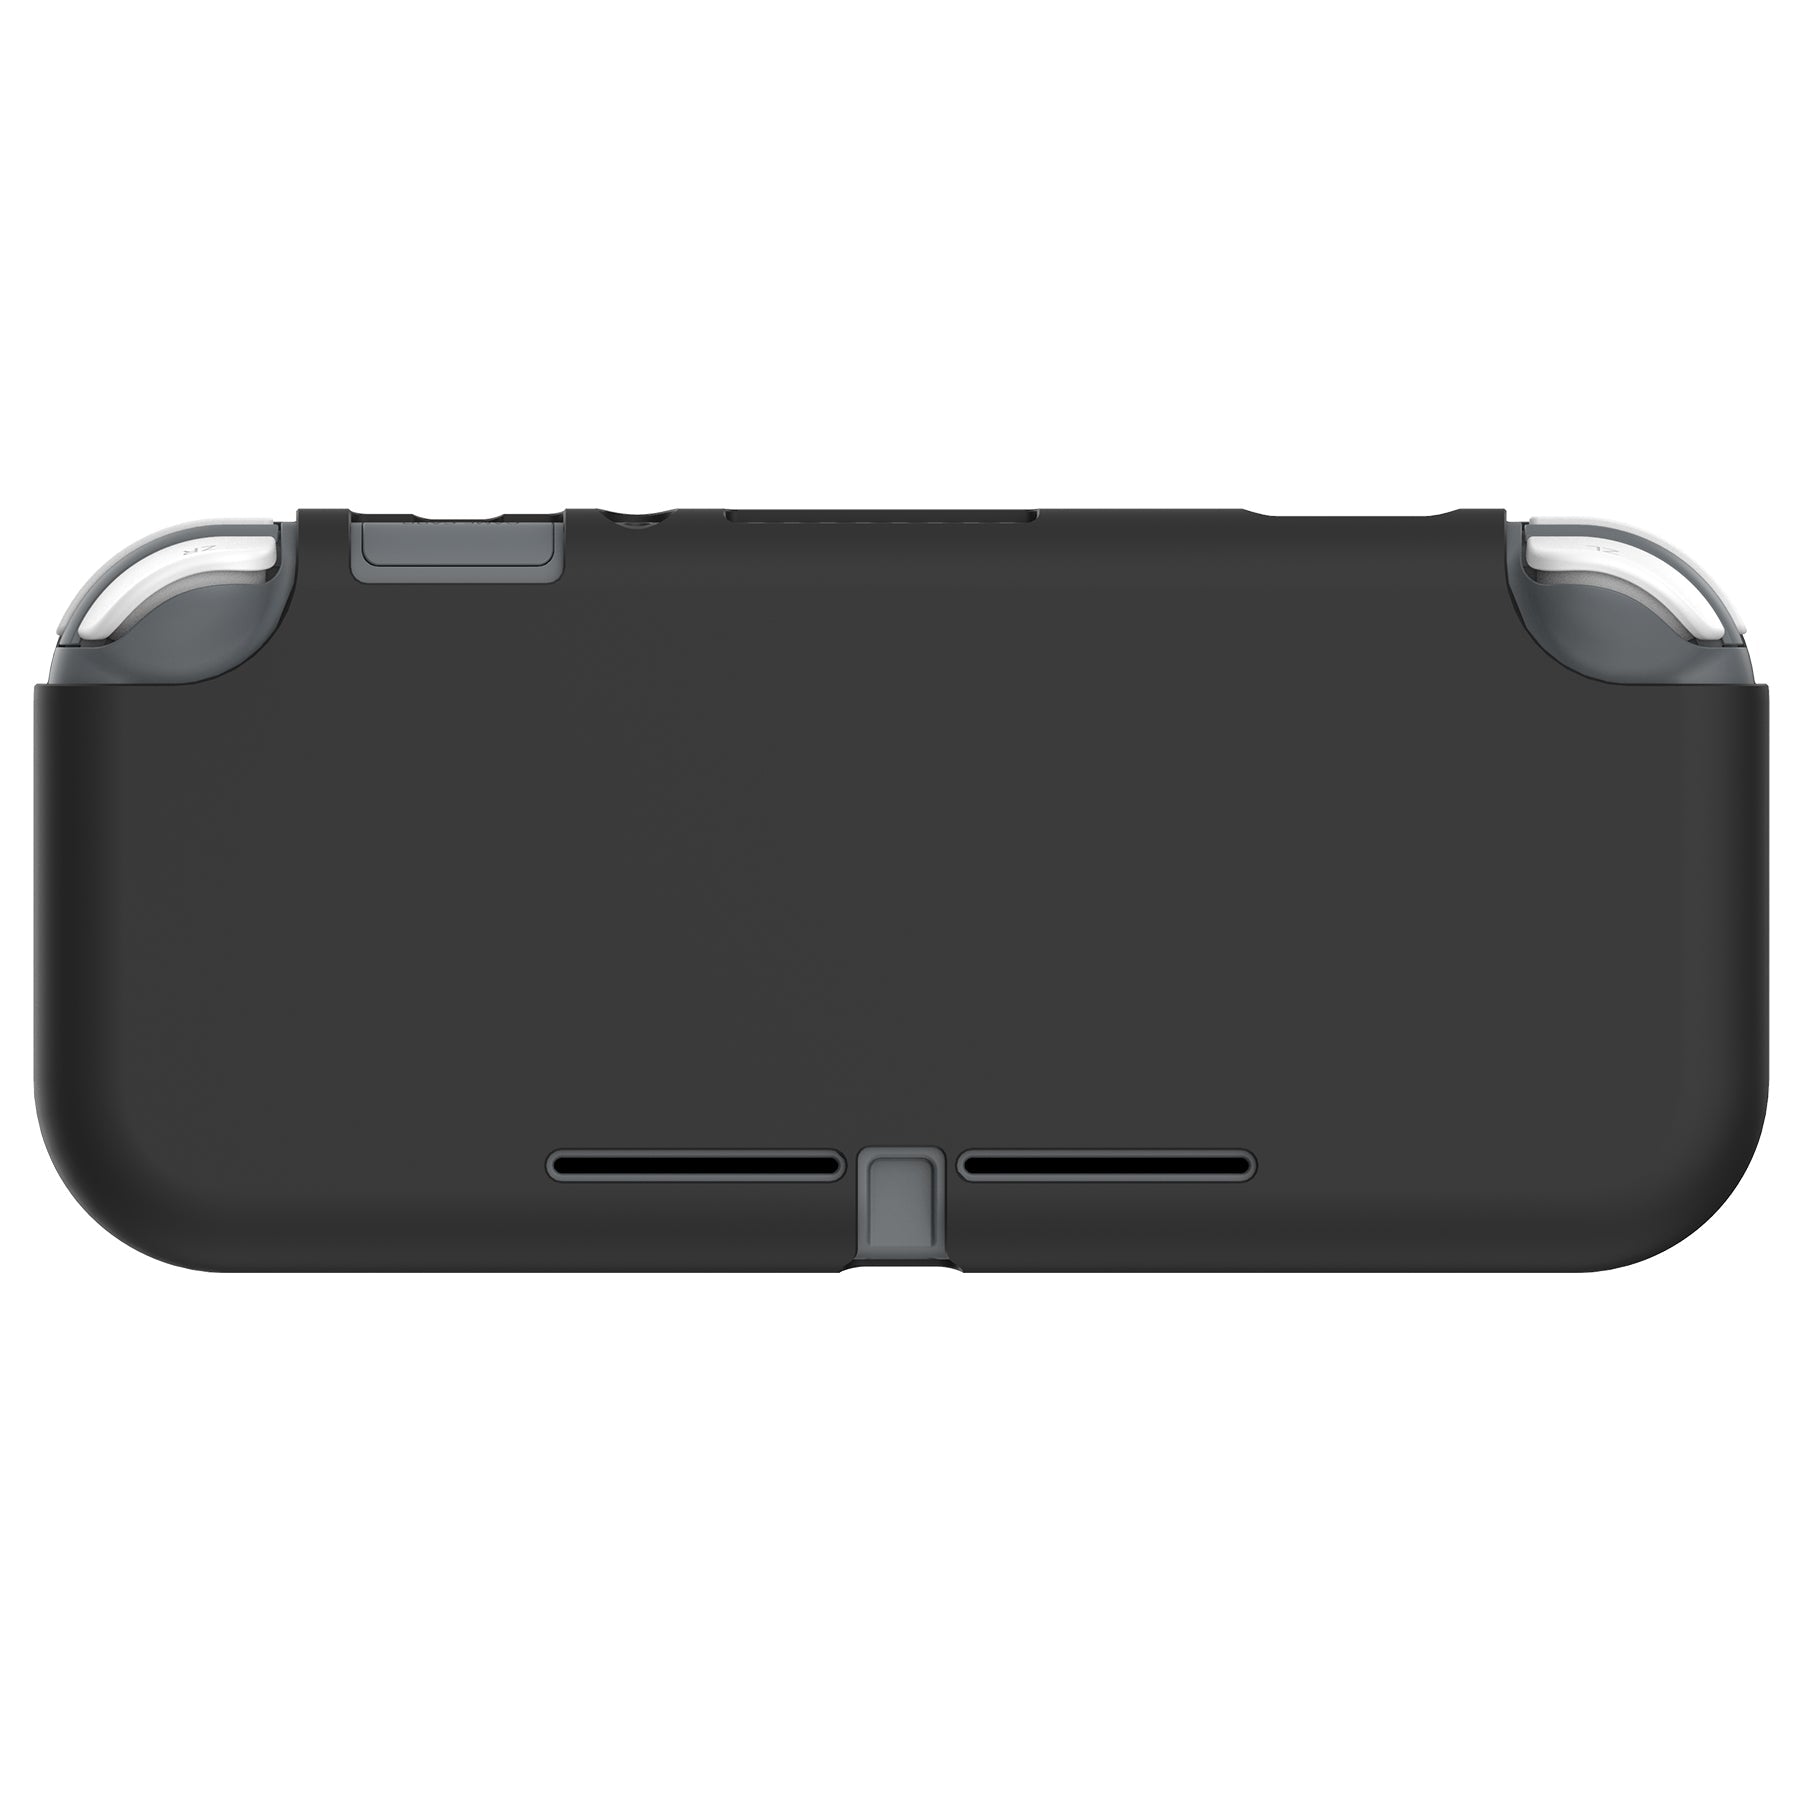 PlayVital Soft TPU Slim Protective Case for NS Switch Lite - Black - LTU6016